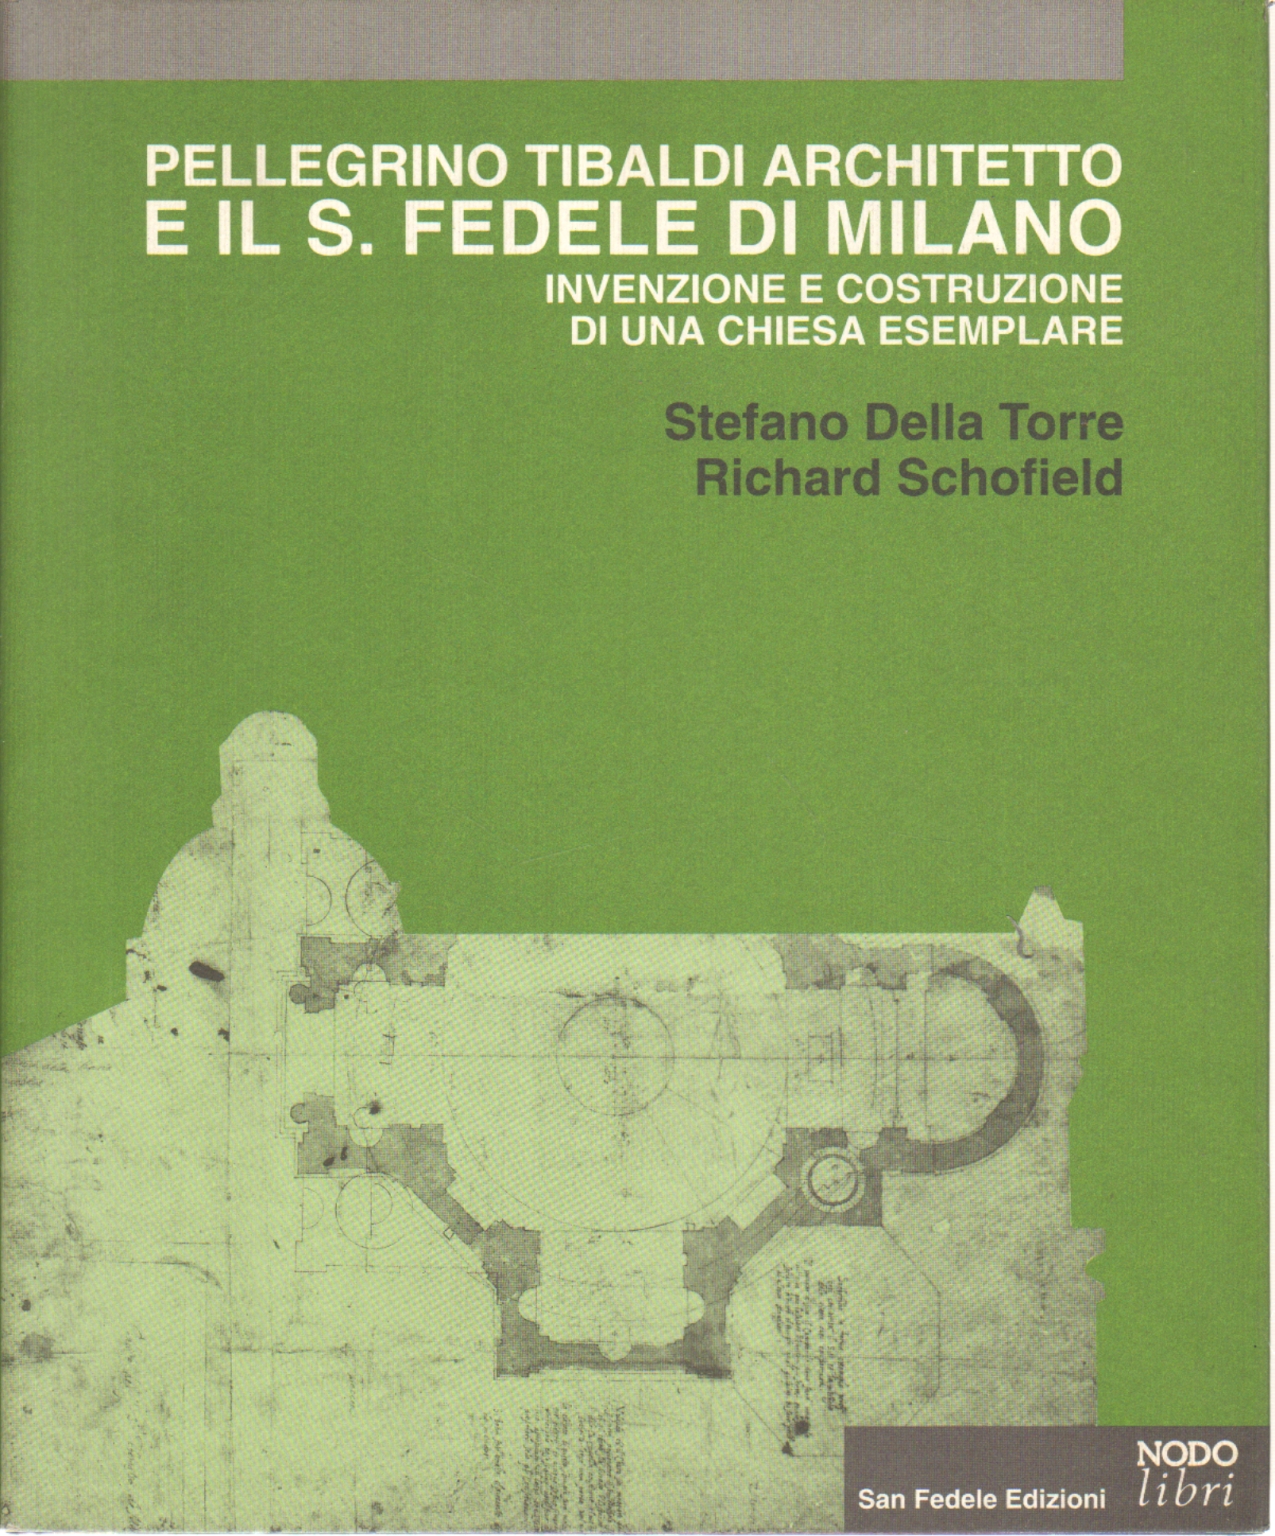 Pellegrino Tibaldi architect and the S. Fed